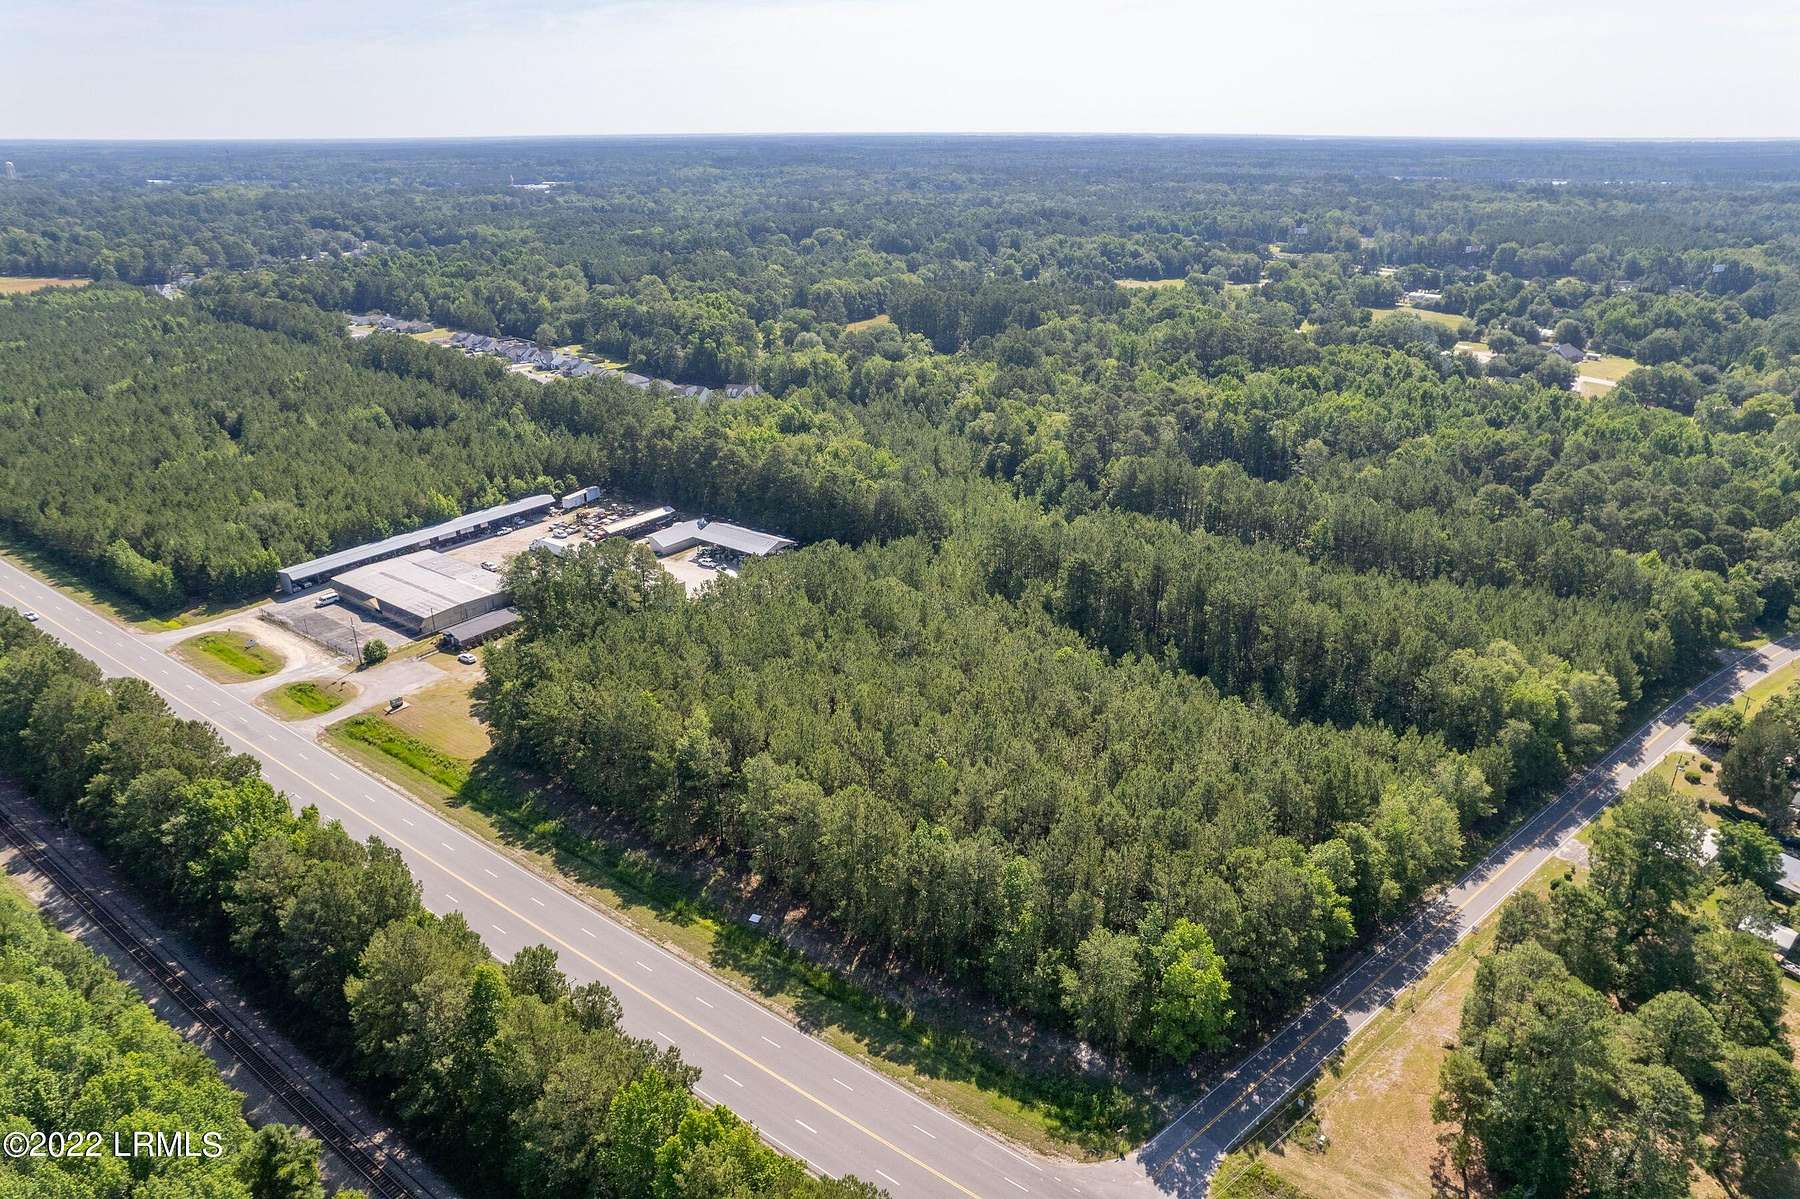 9.4 Acres of Mixed-Use Land for Sale in Ridgeland, South Carolina